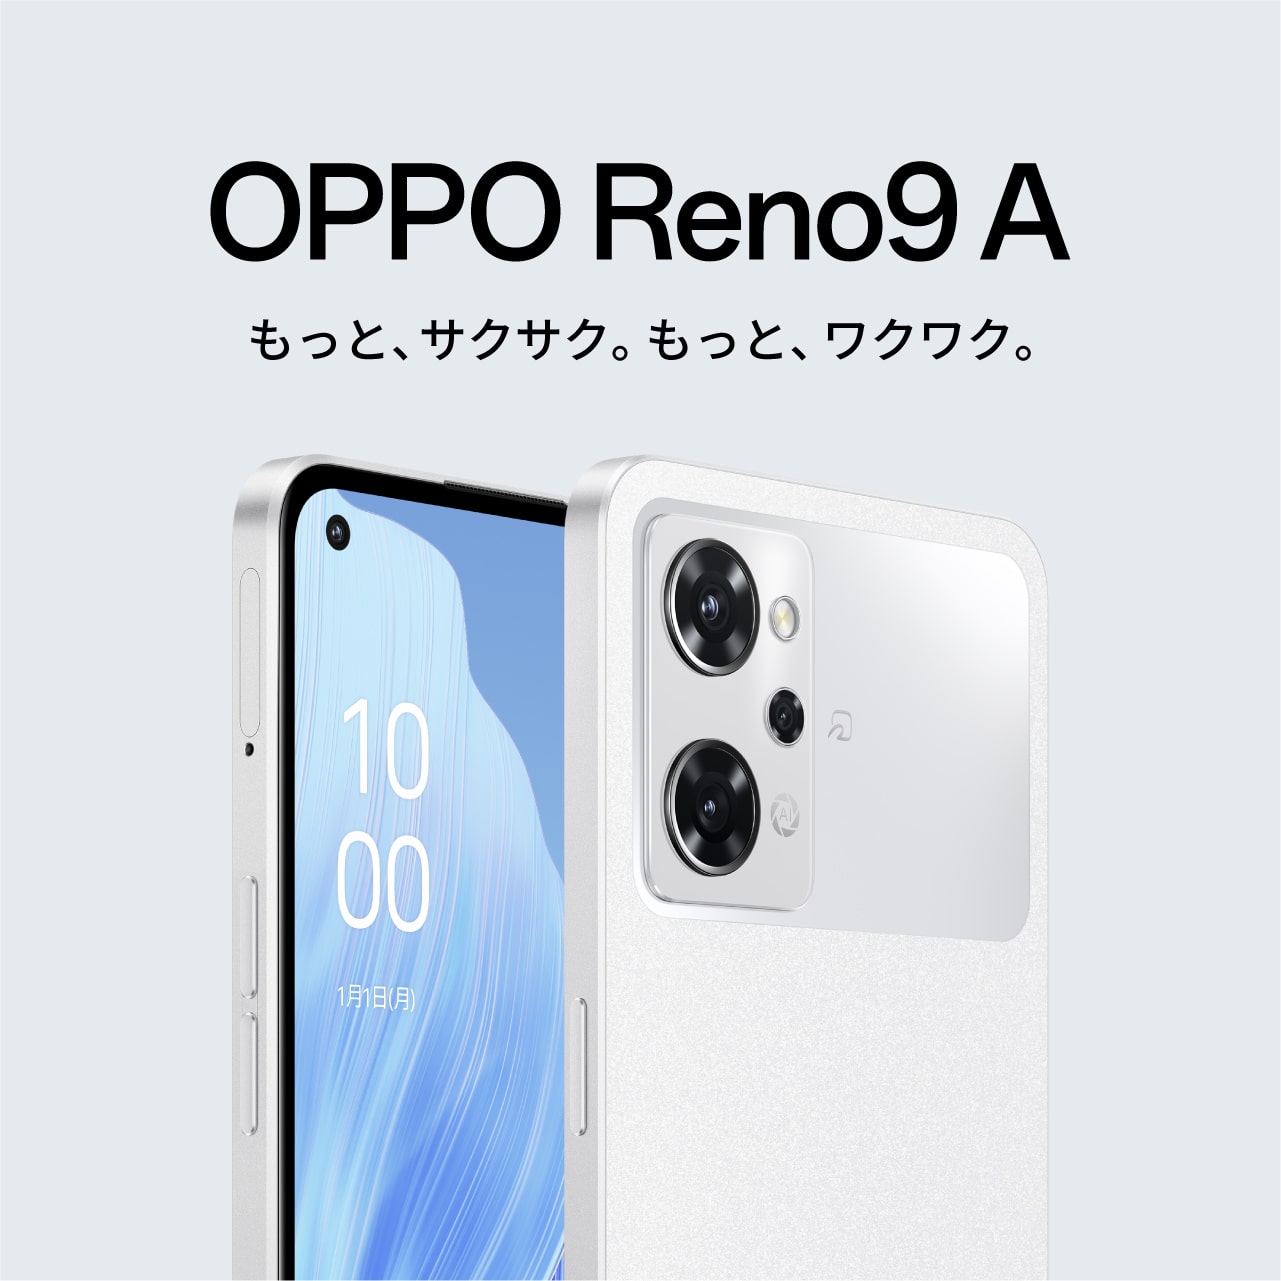 OPPO Reno9 A ムーンホワイト 128 GB Y!mobile-silversky-lifesciences.com